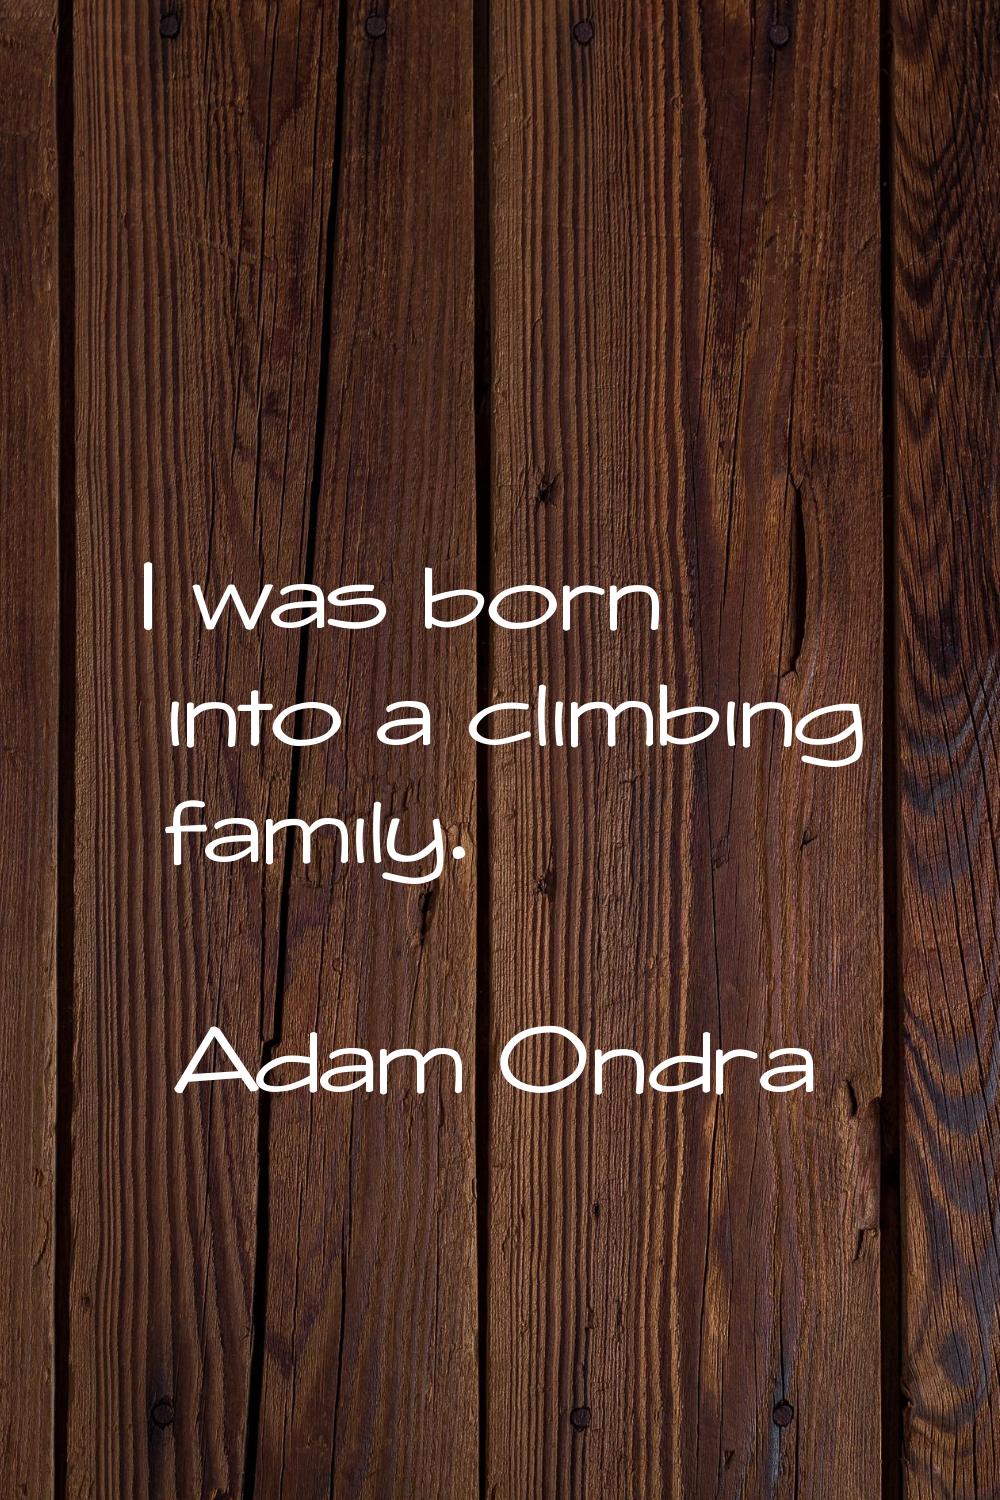 I was born into a climbing family.